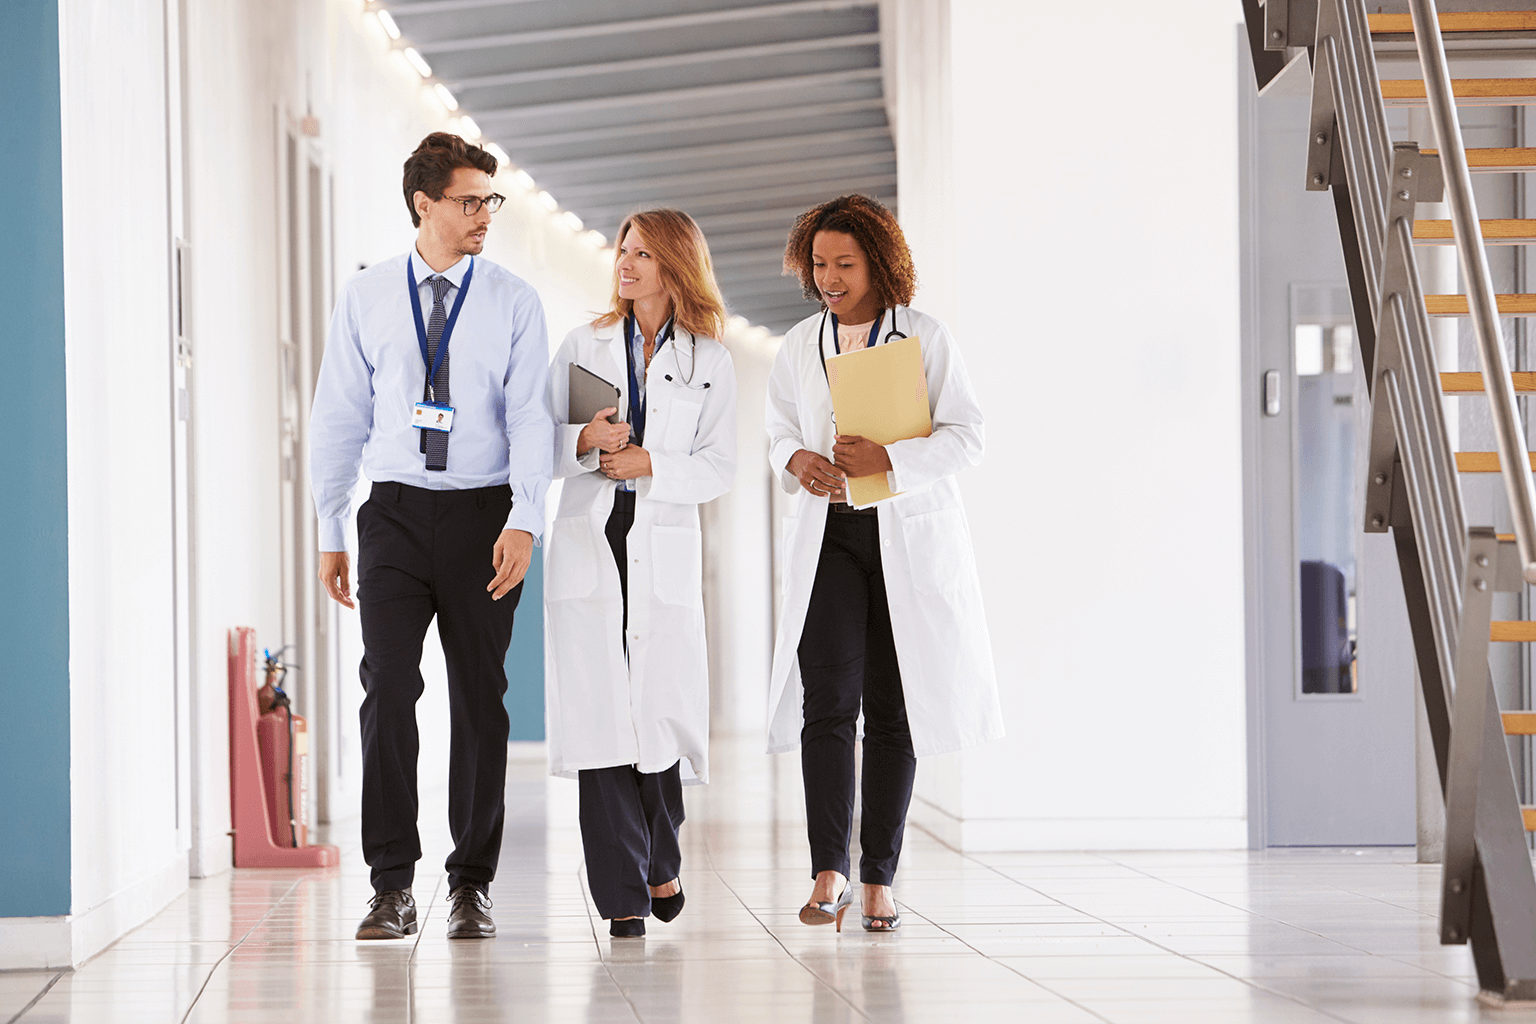 clinicians-walking-down-hallway-in-hospital